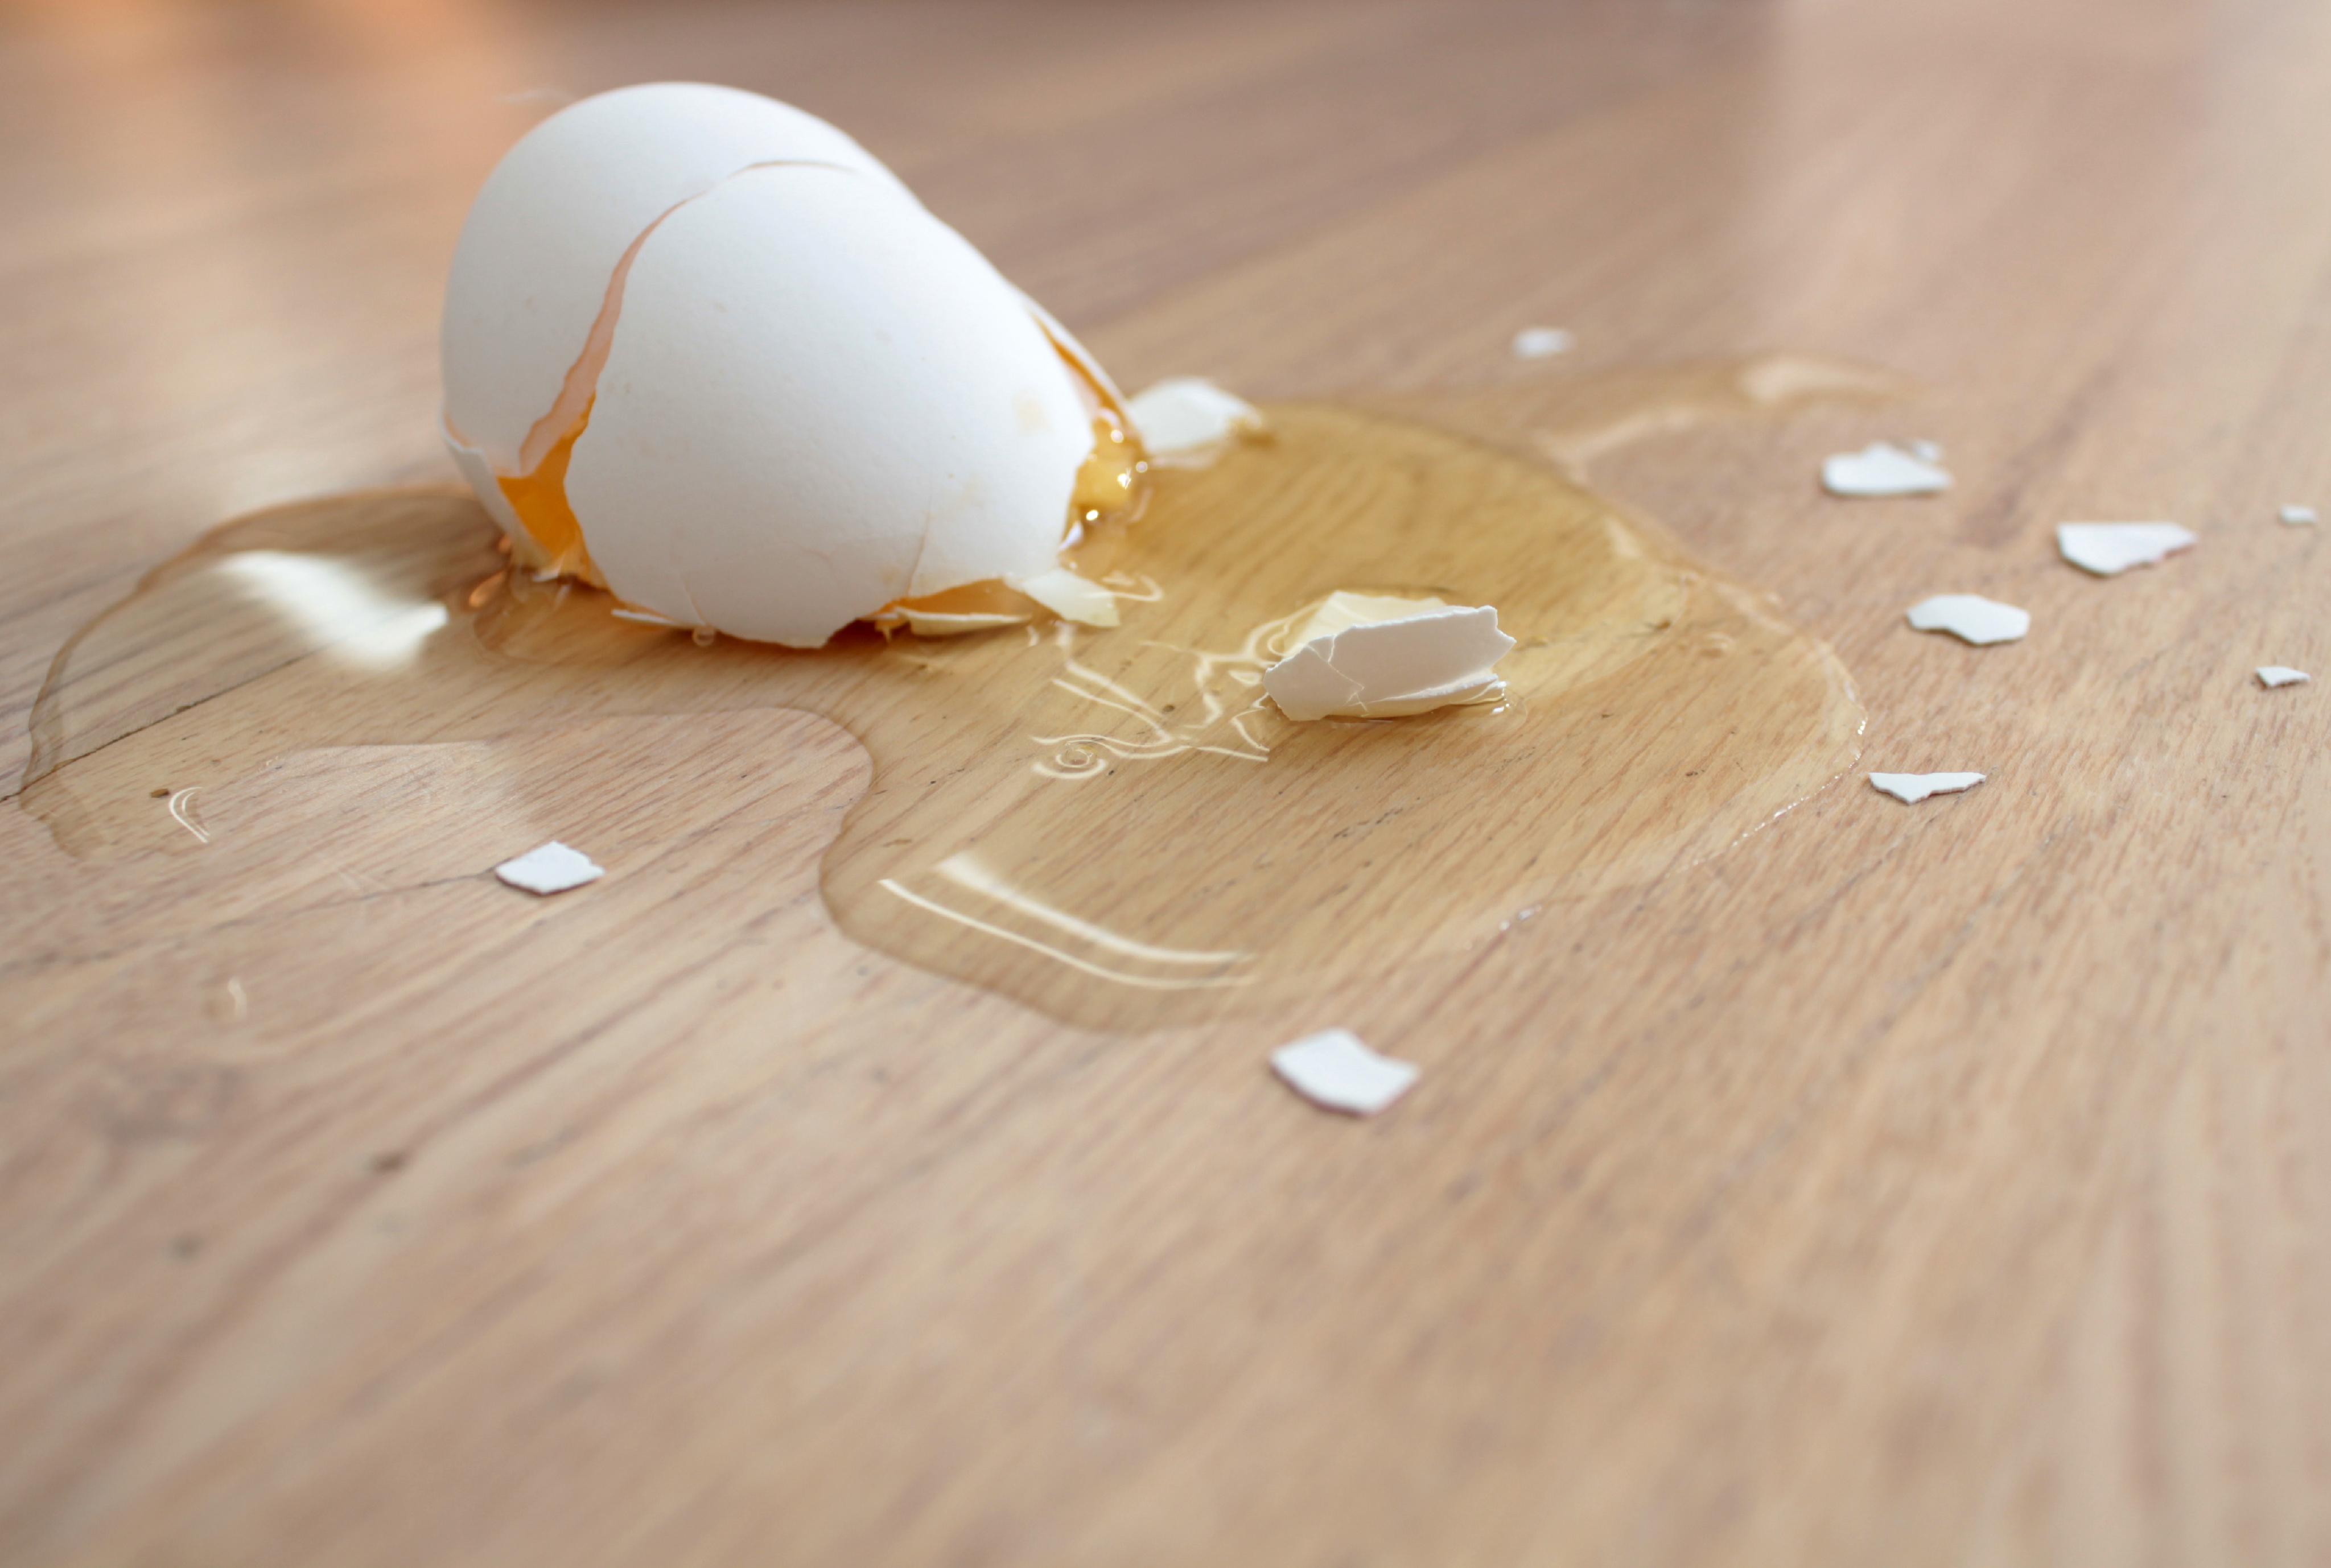 Разбей яйцо 2. Разбитое яйцо. Яйцо разбилось. Разбитые яйца. Разбитое куриное яйцо.